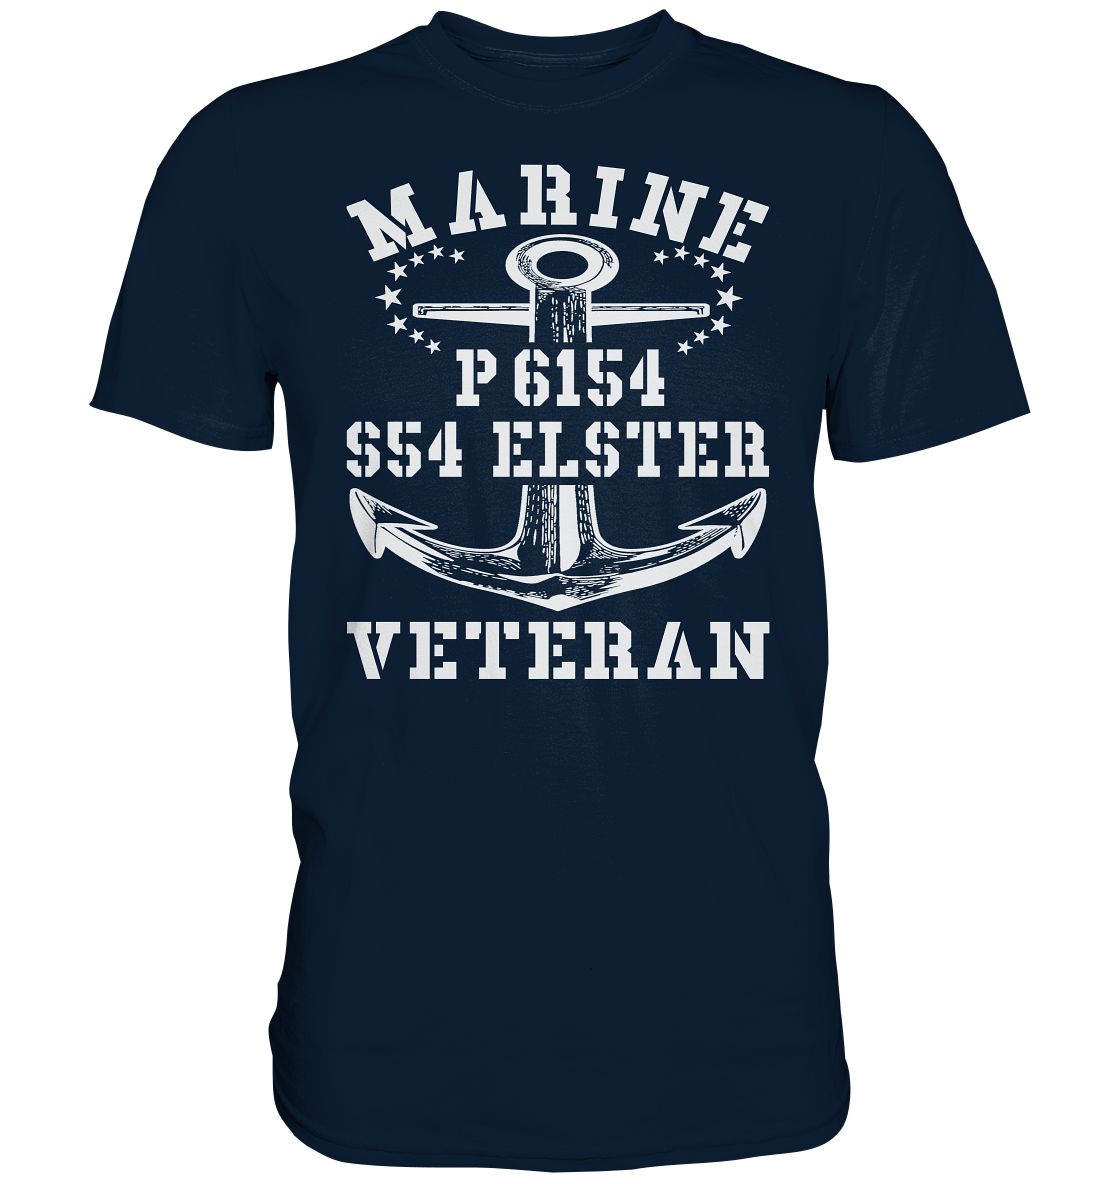 P6154 S54 ELSTER Marine Veteran - Premium Shirt